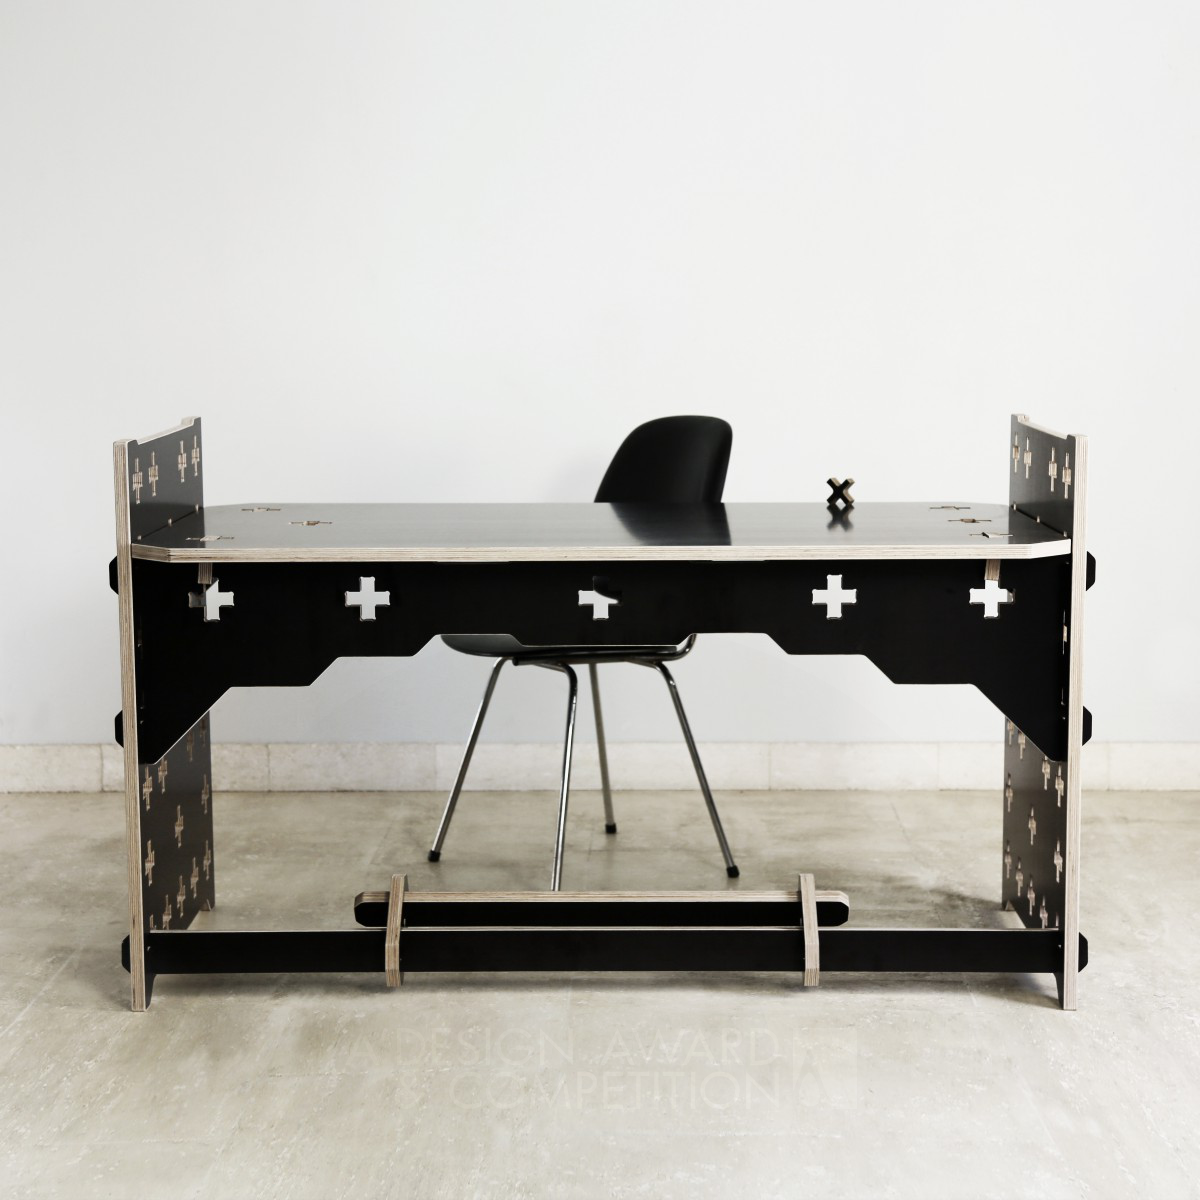 yves-marie Geffroy Agile Furniture